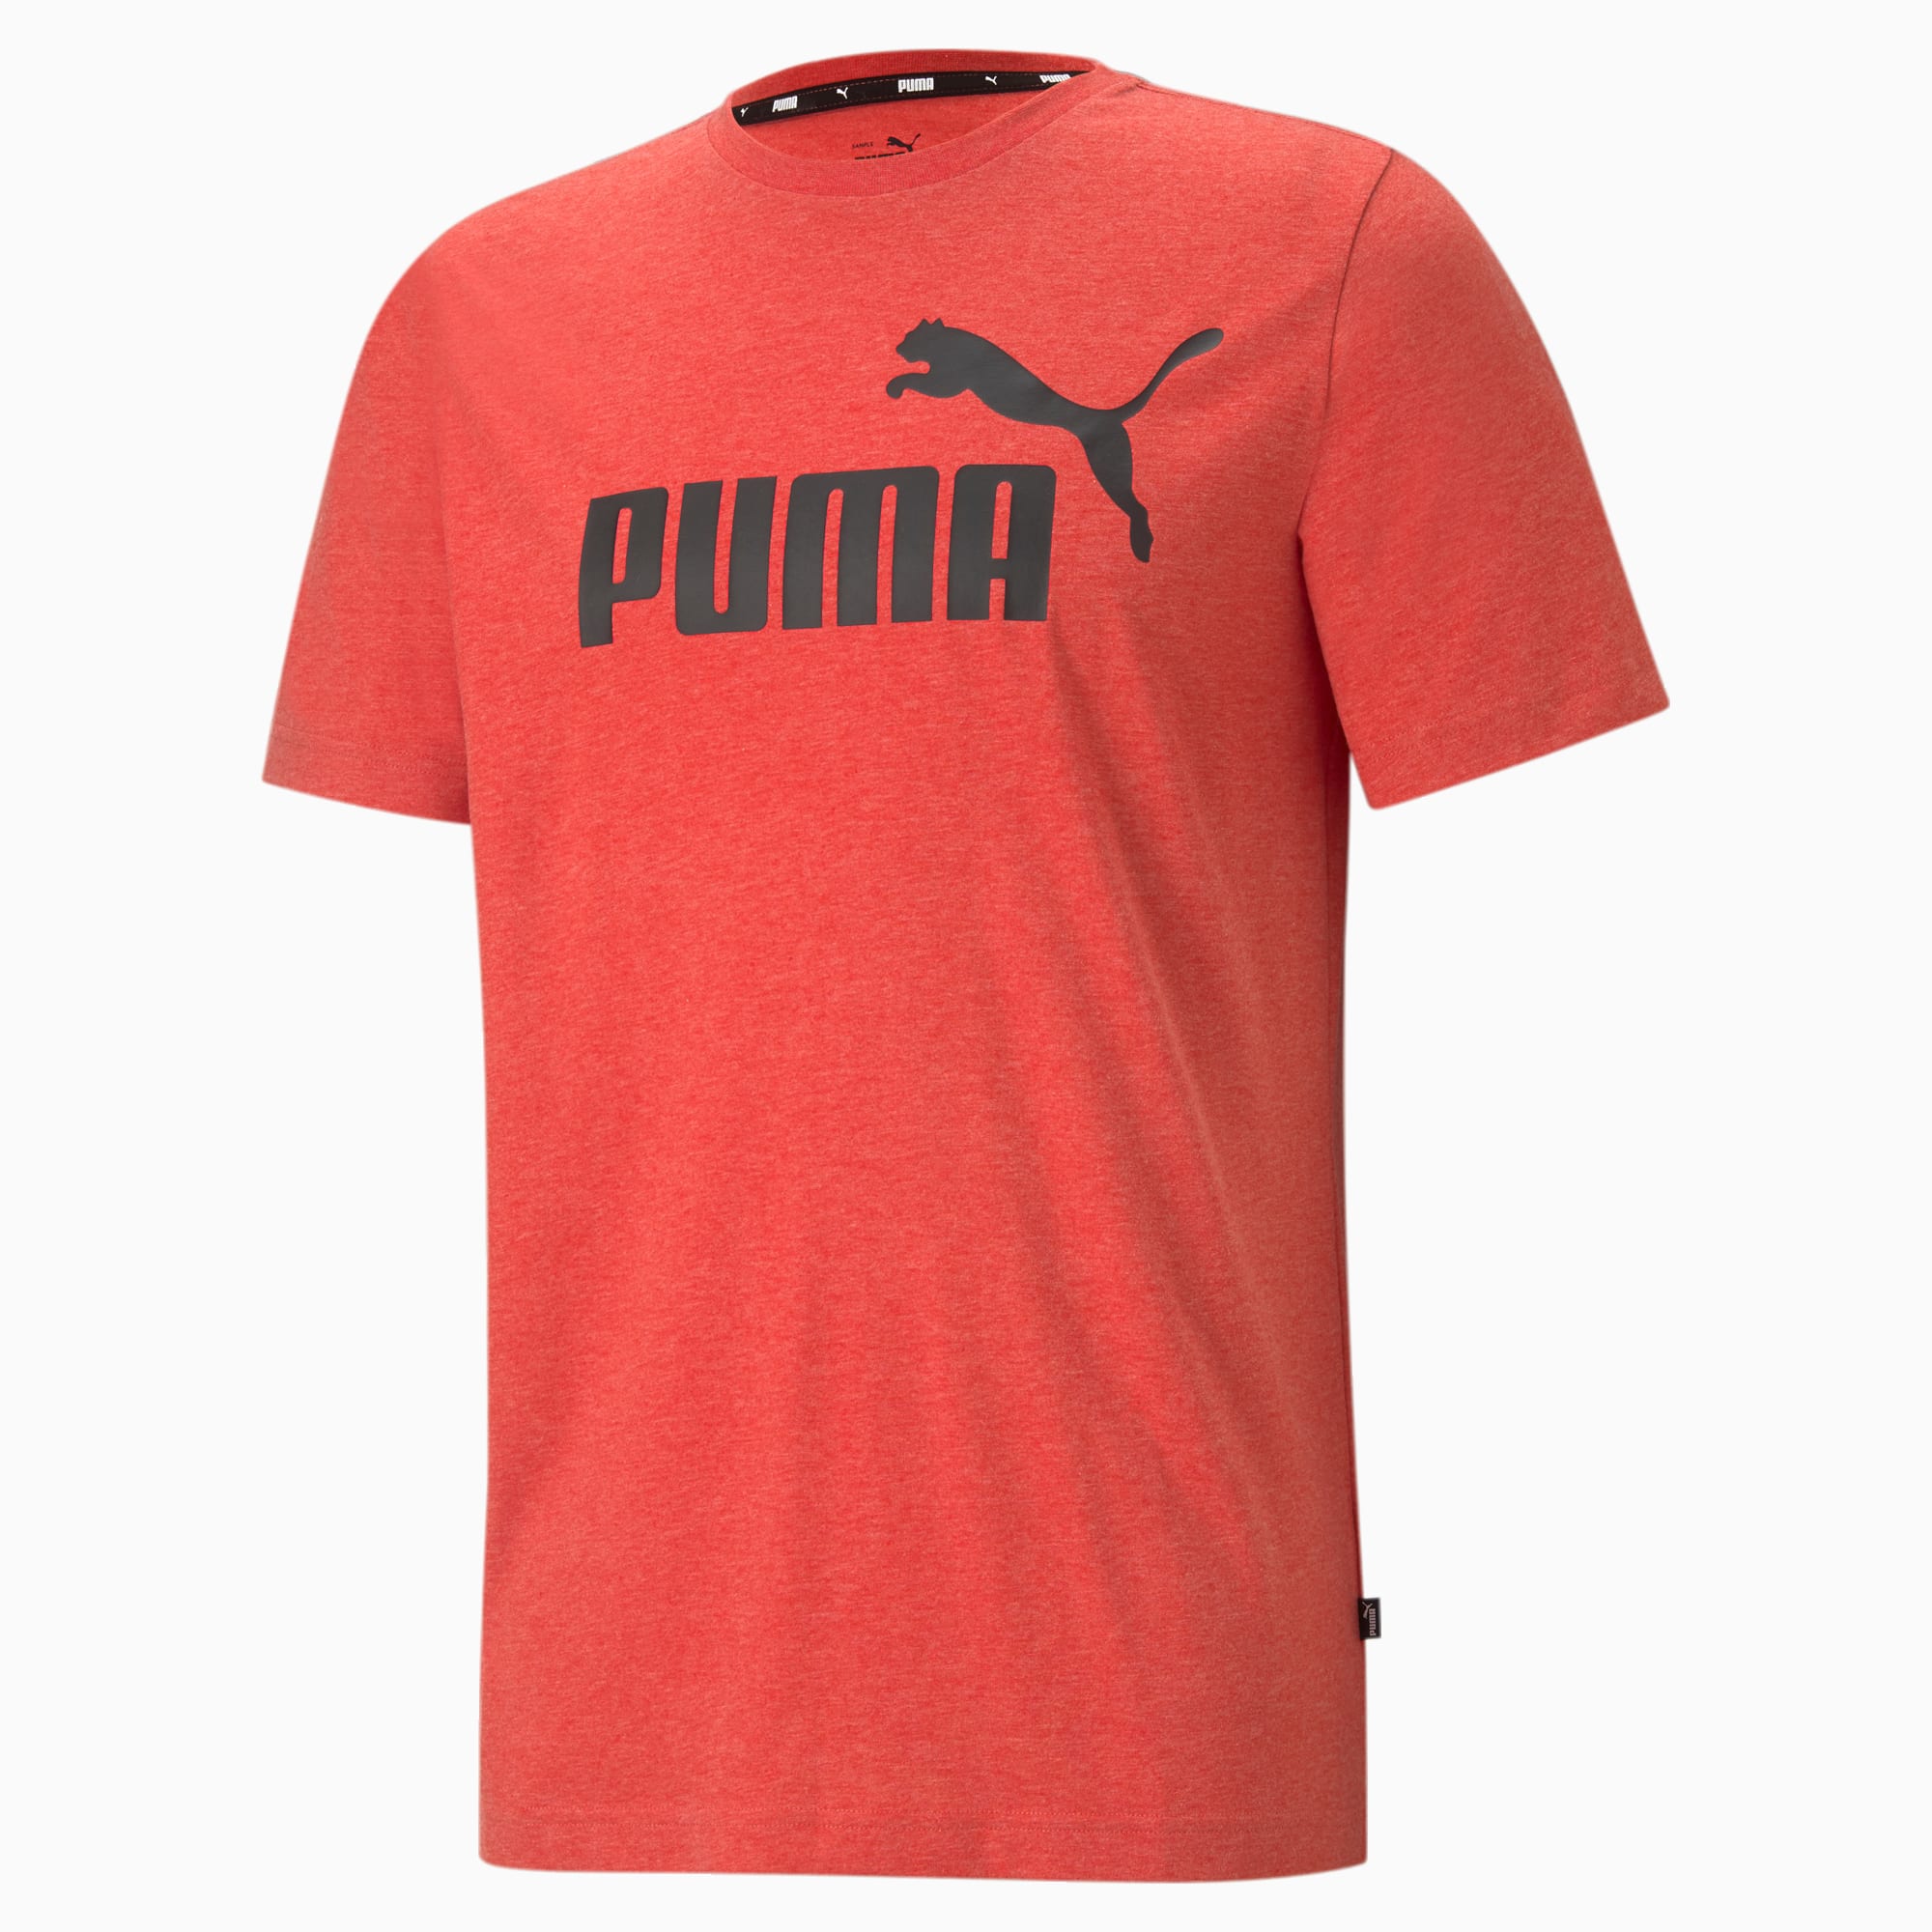 PUMA Essentials Heather Men's T-Shirt, High Risk Red, Size M, Clothing